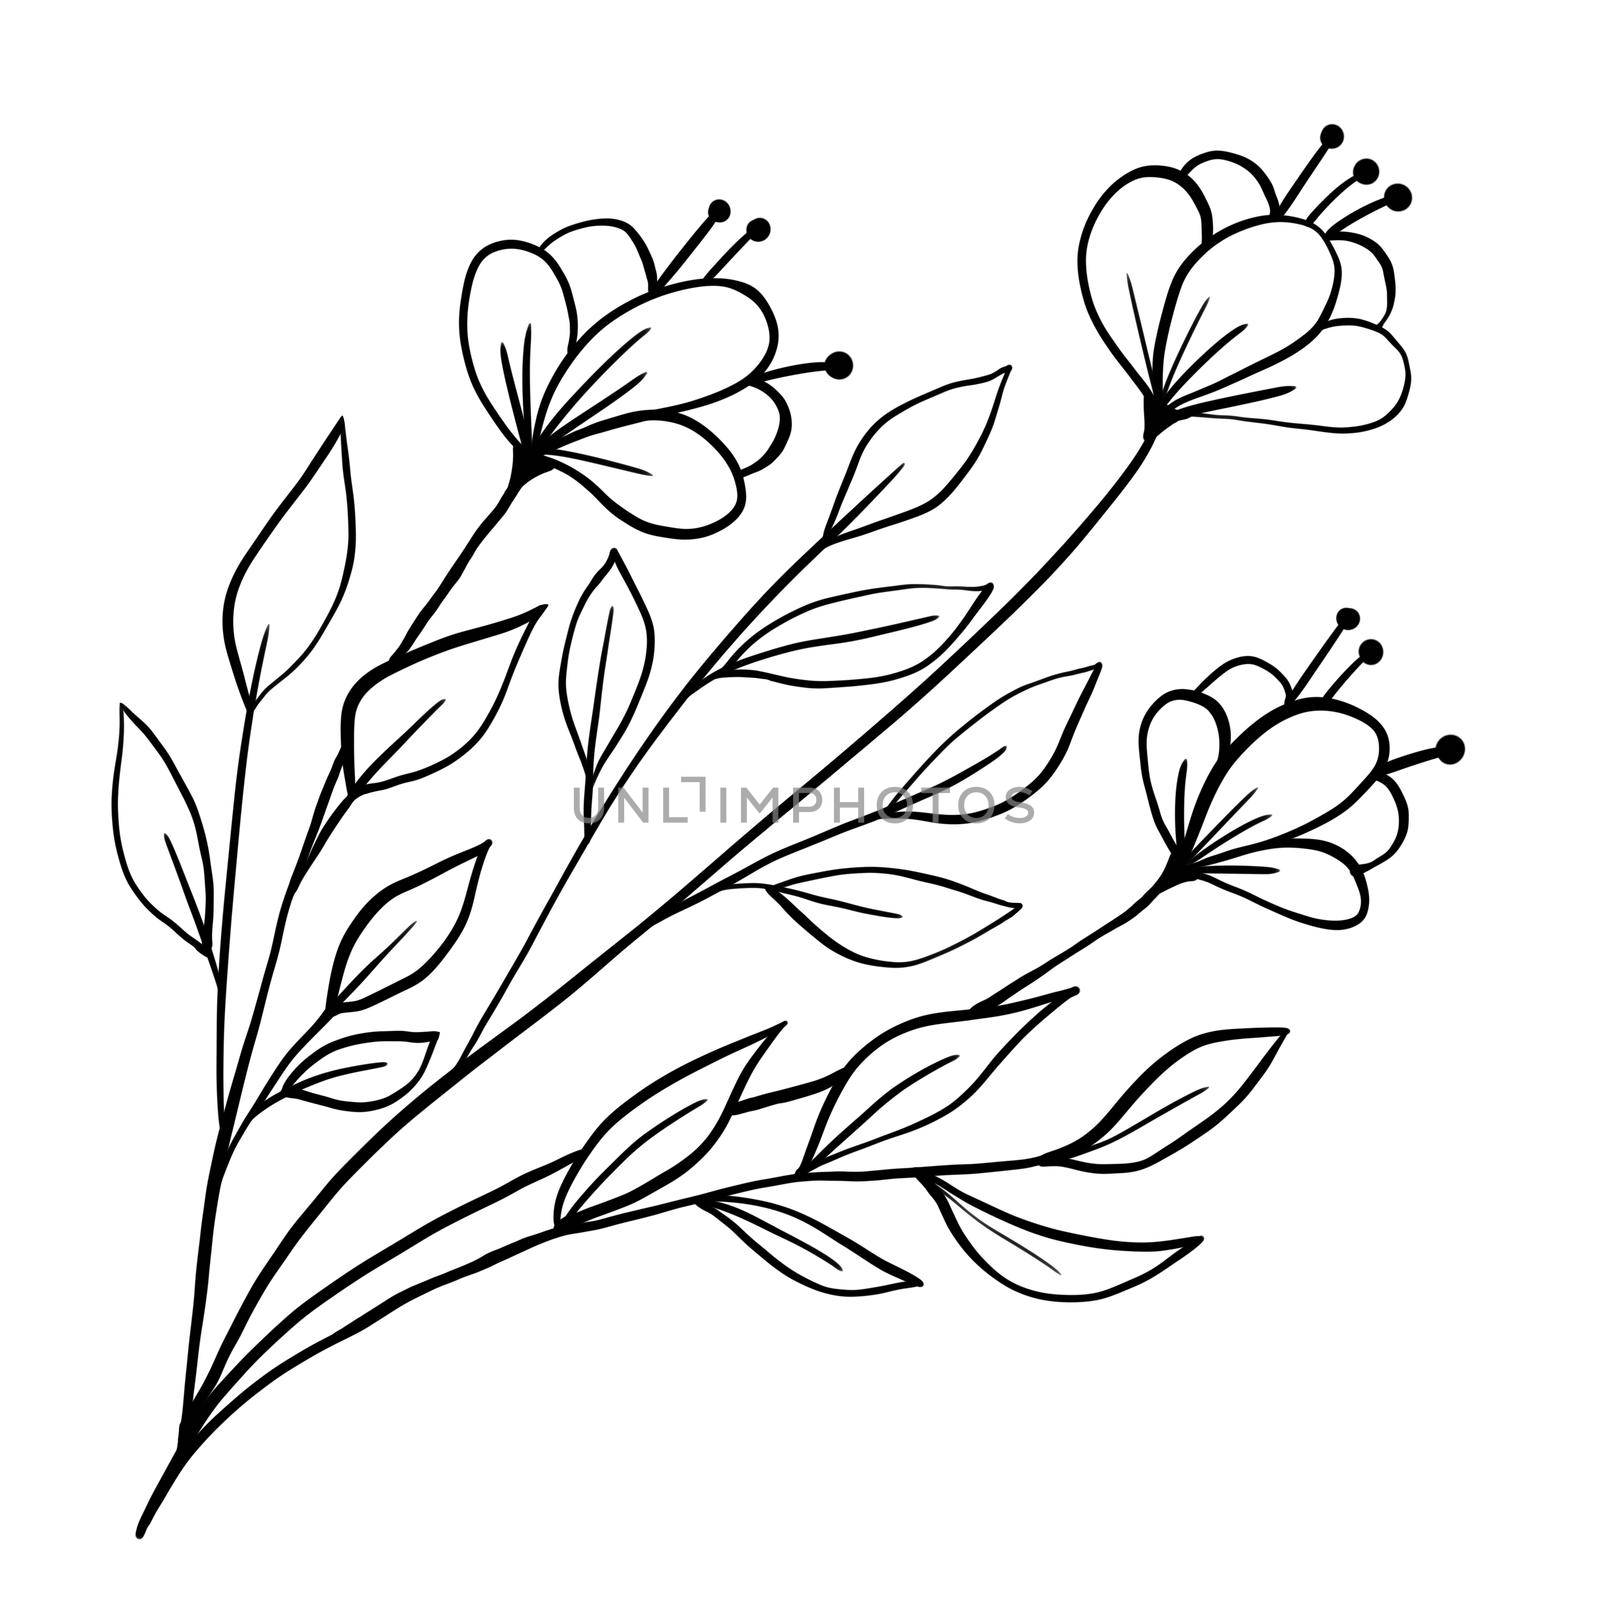 Hand drawn floral flower leaves illustration, black white elegant wedding ornament, Line art minimalism tattoo style design summer spring nature branch foliage blossom. by Lagmar